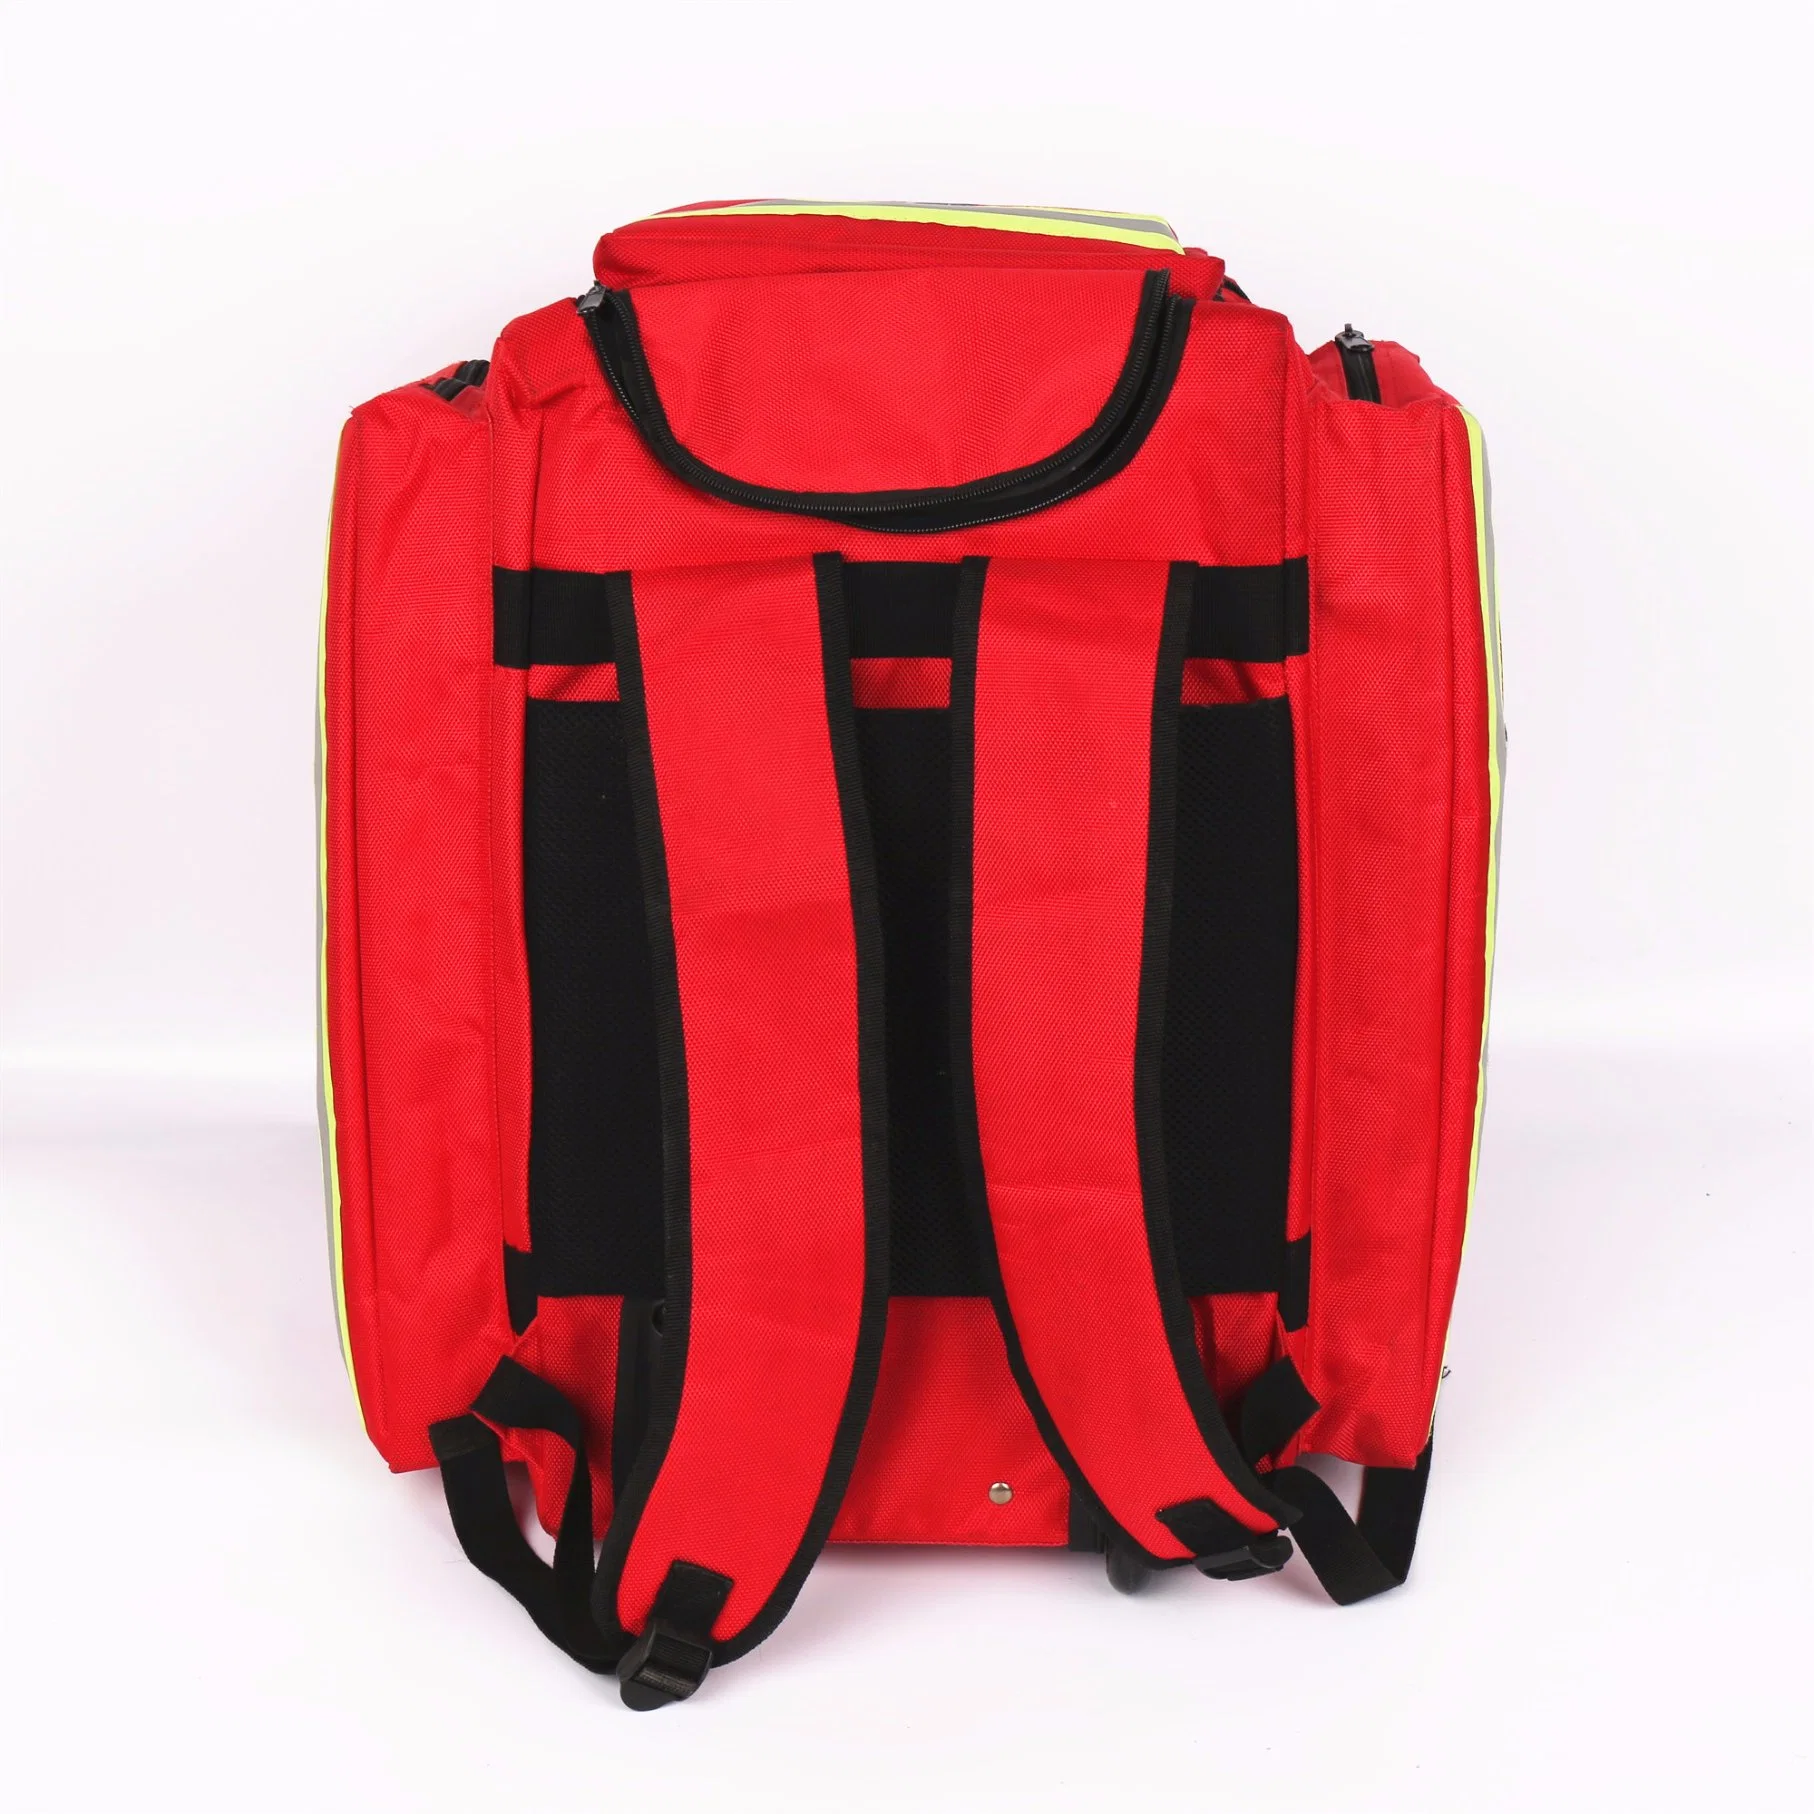 Ambulance First Aid Bag Rescue Trauma Bag Medical Equipment Bag